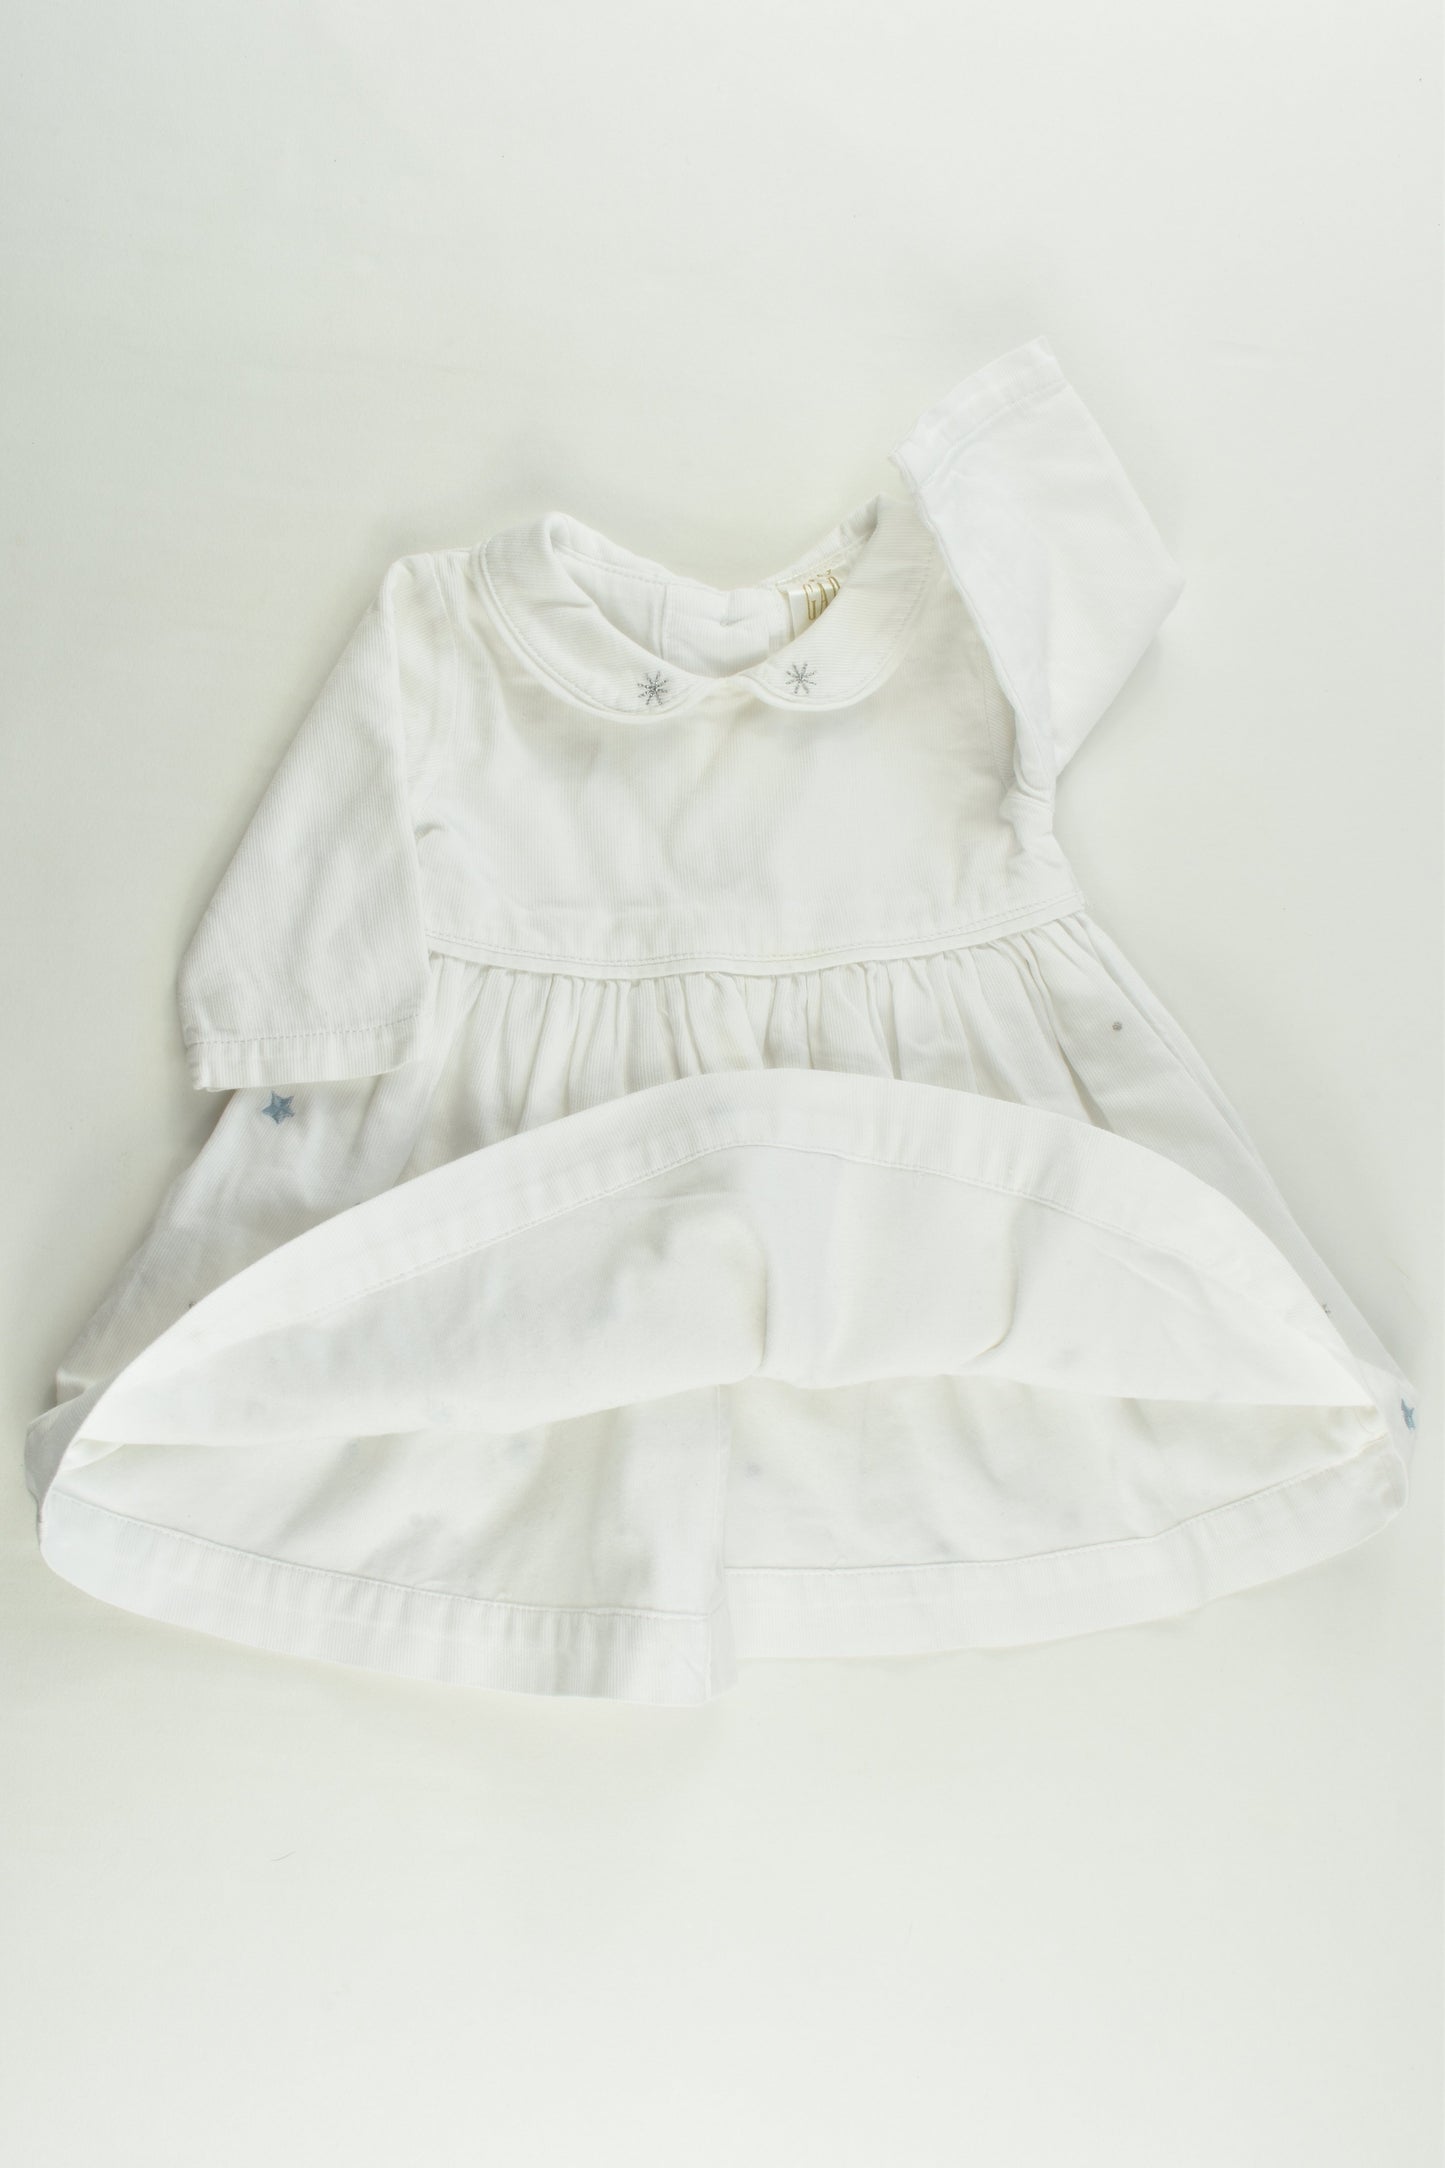 Baby Gap Size 000 (Newborn, 3-6 months) Stars Lined Dress